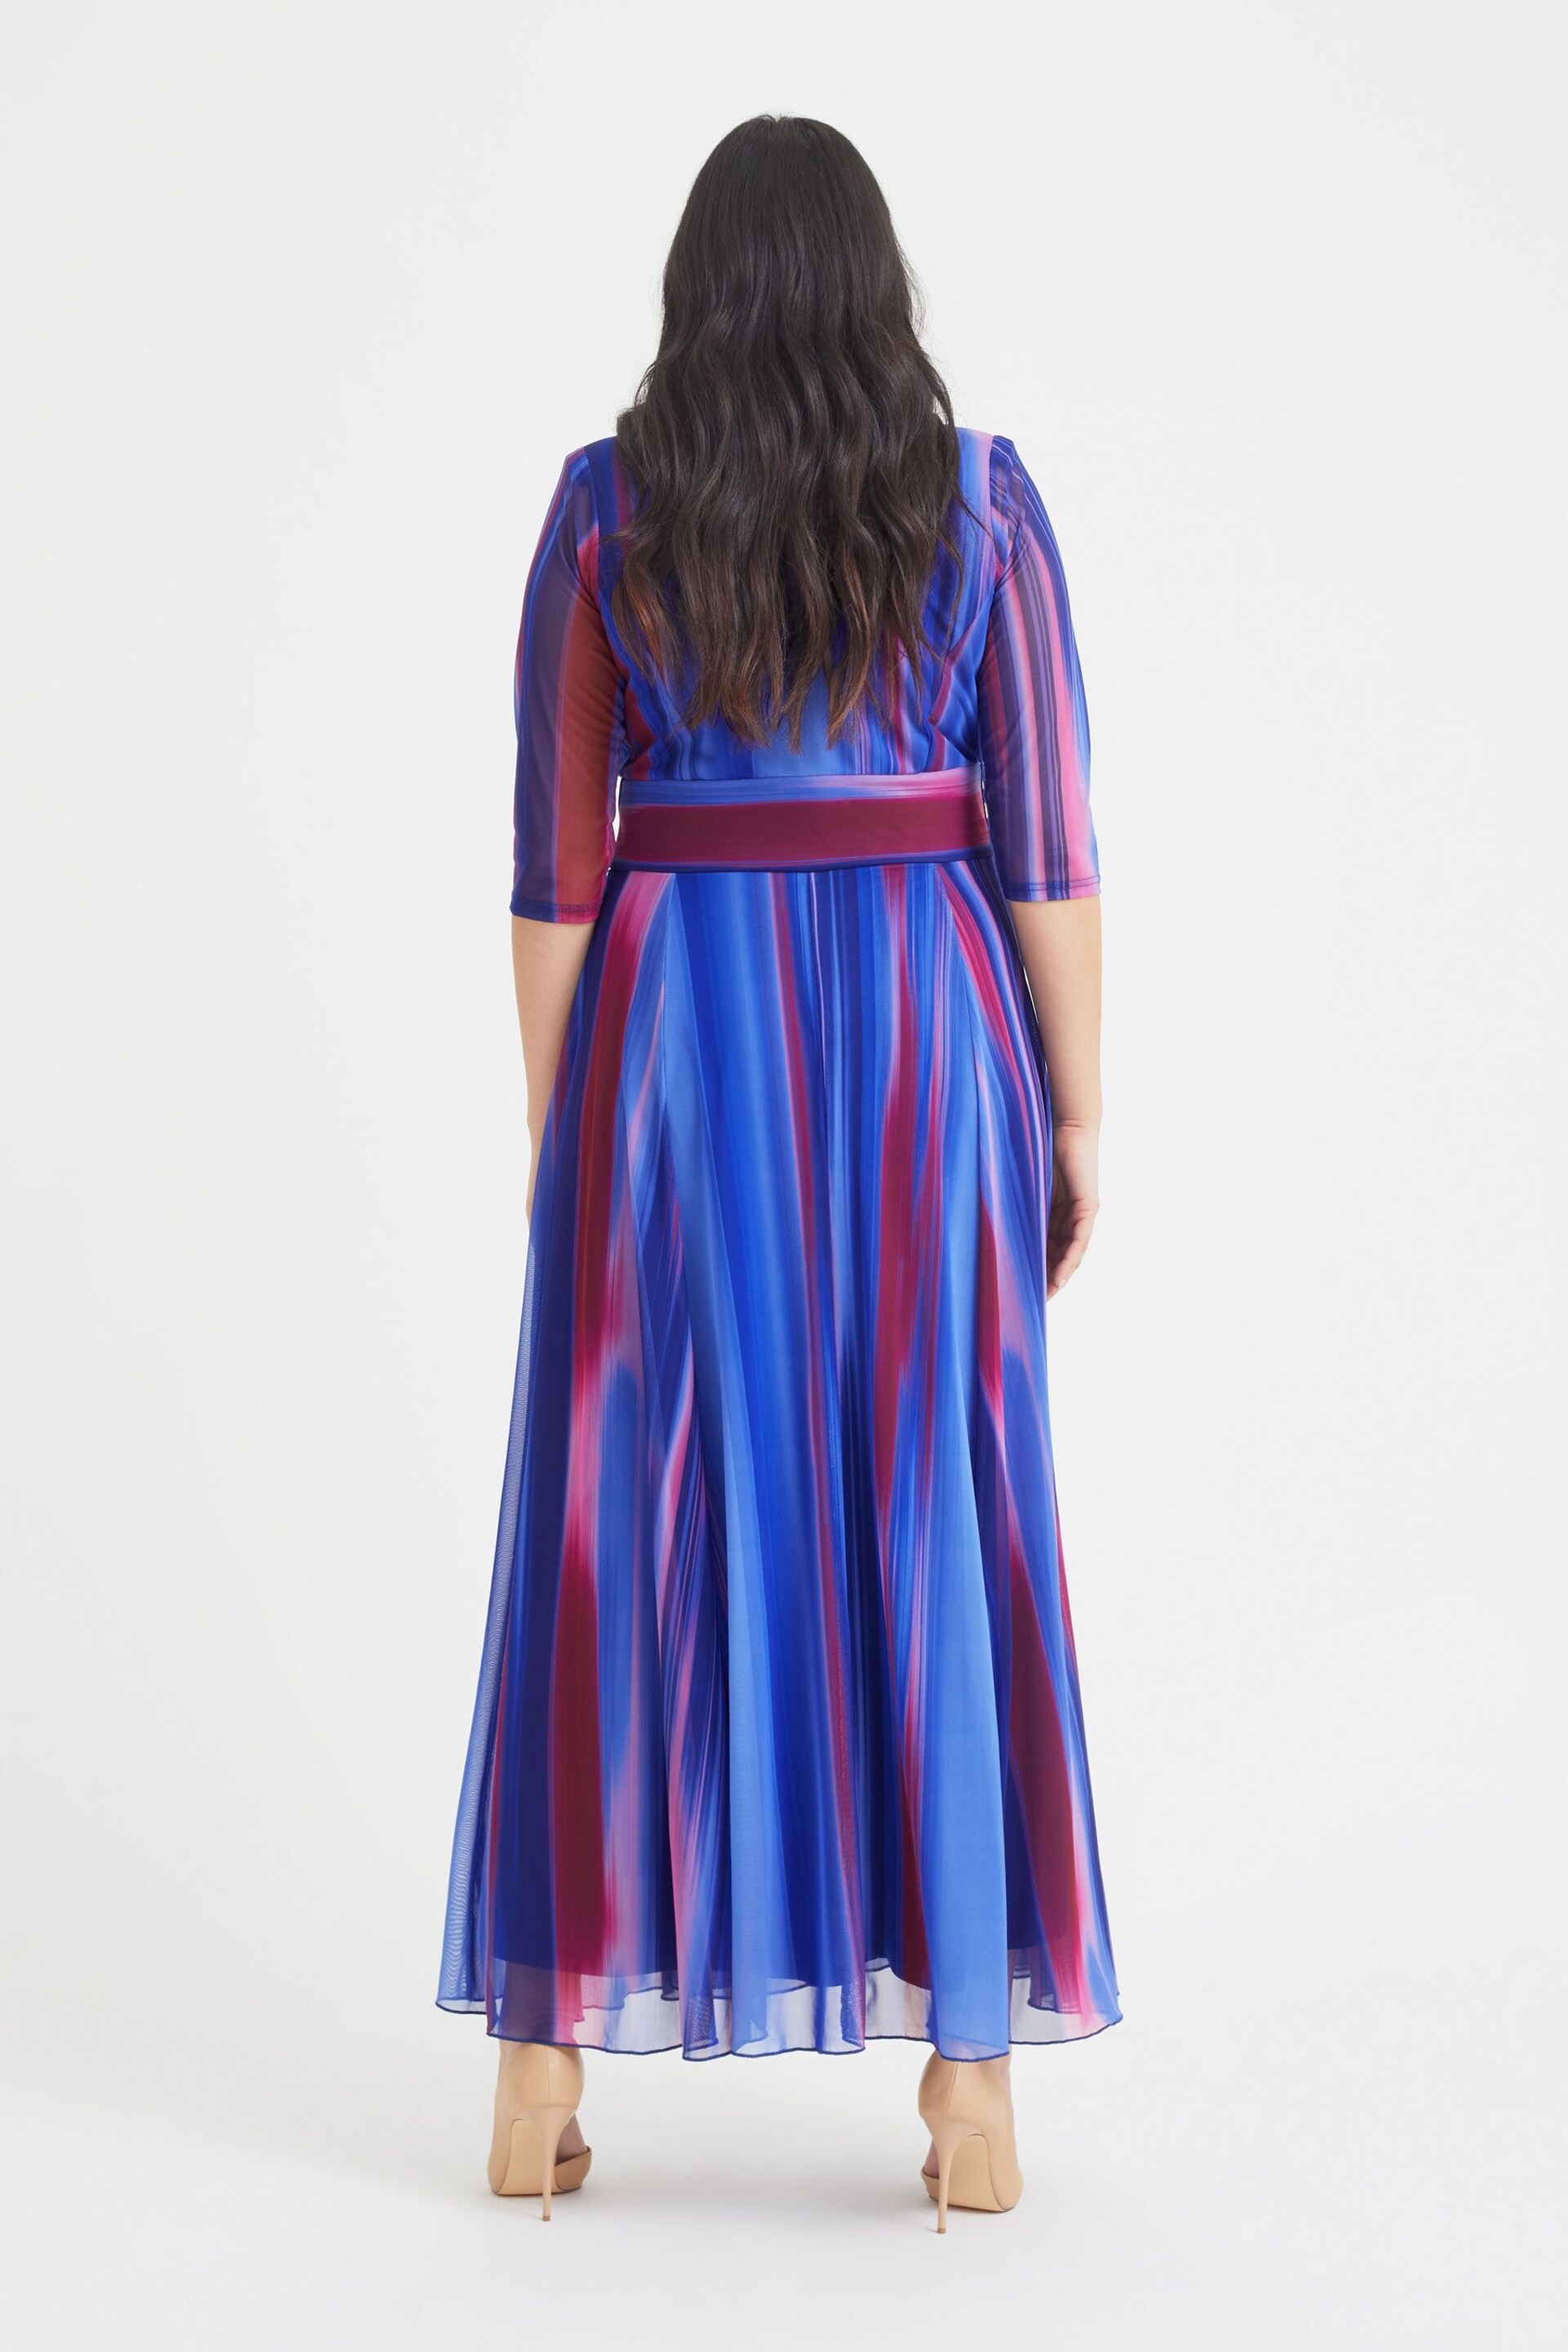 Scarlett & Jo Blue Verity Ikat Print Maxi Gown - Image 2 of 4